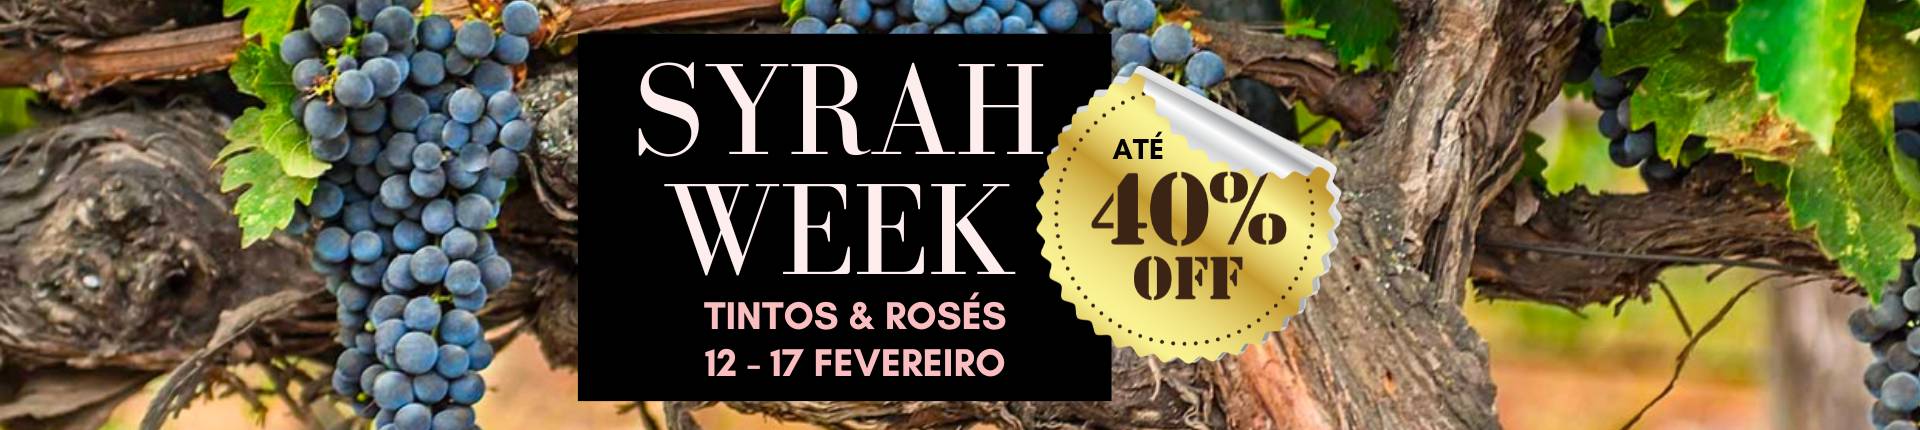 Syrah Week